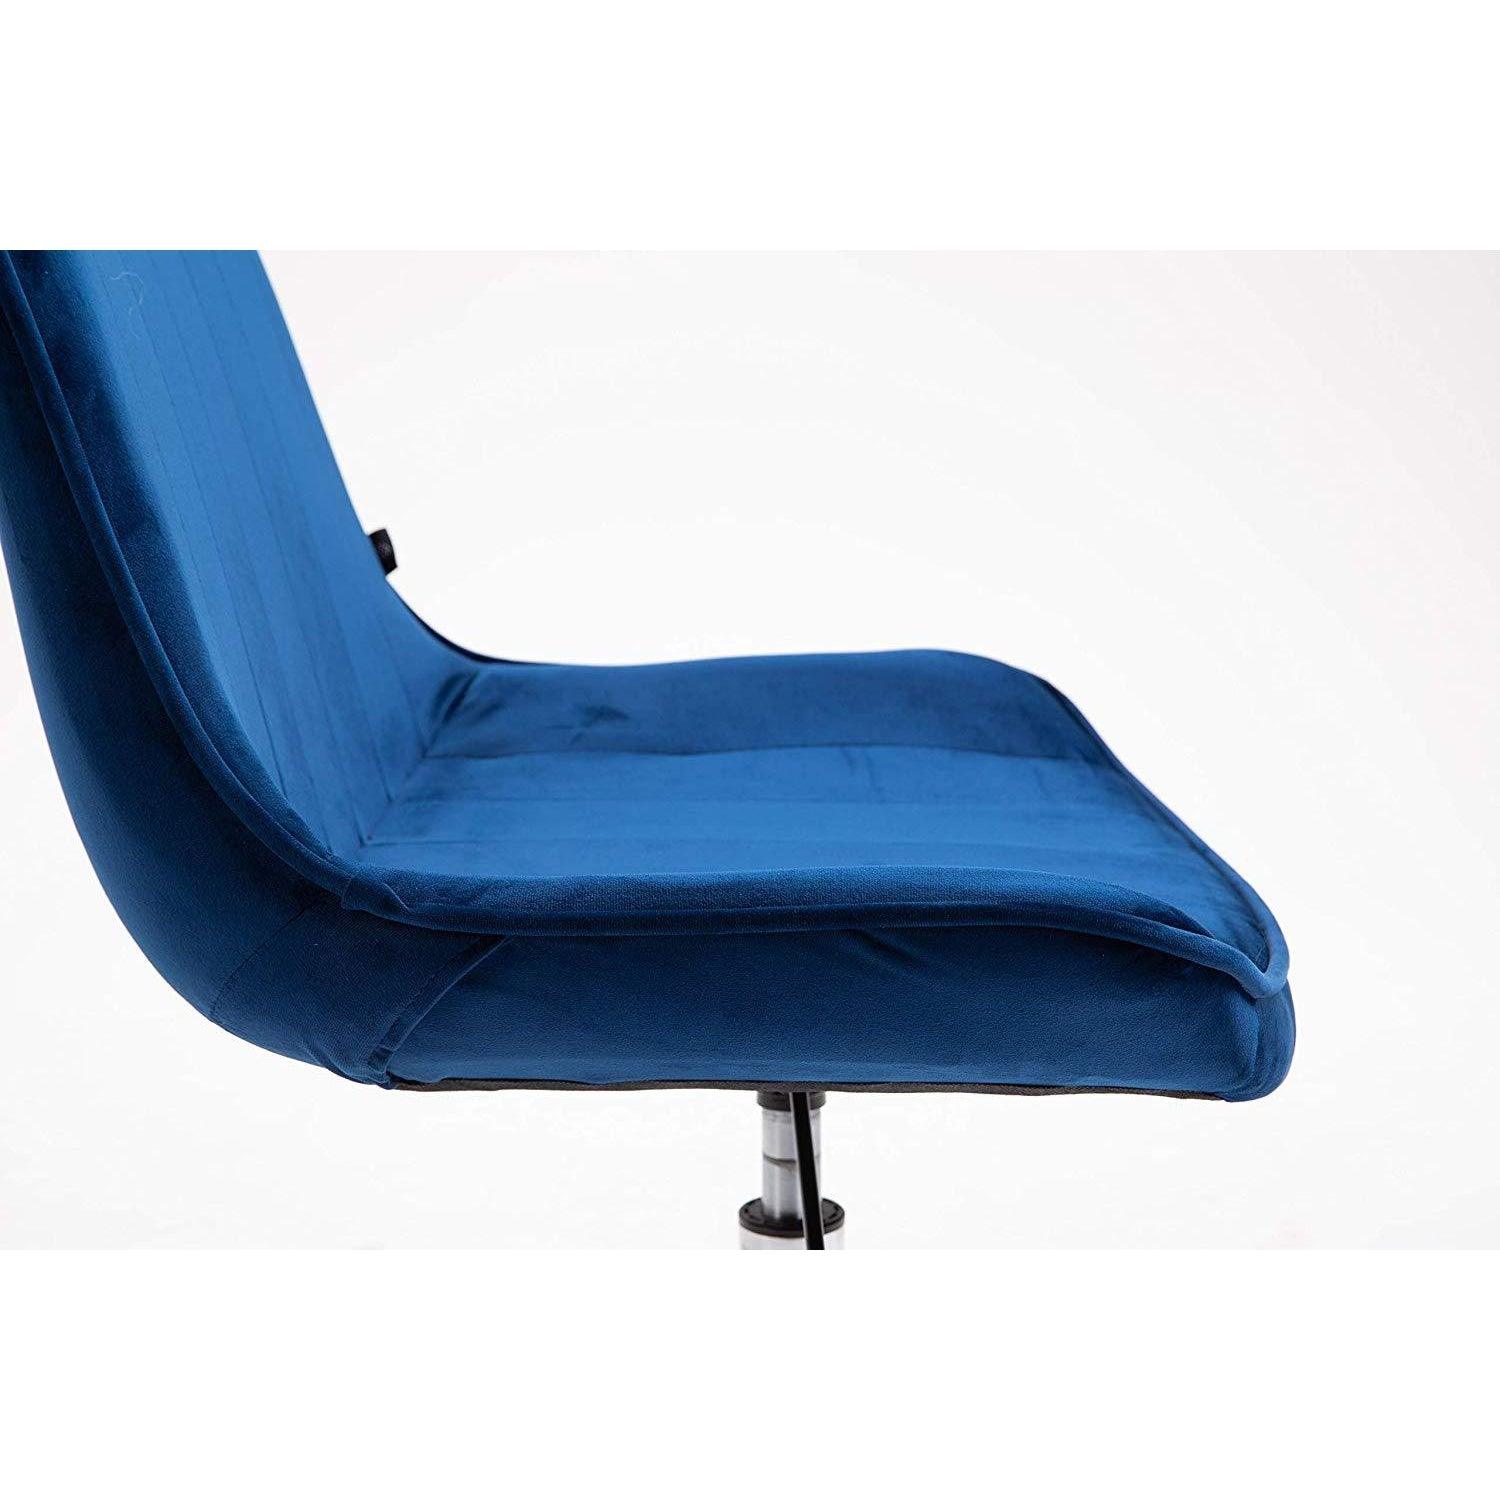 Cherry Tree Furniture Cala Sapphire Blue Colour Velvet Fabric Desk Chair Swivel Chair with Chrome Base